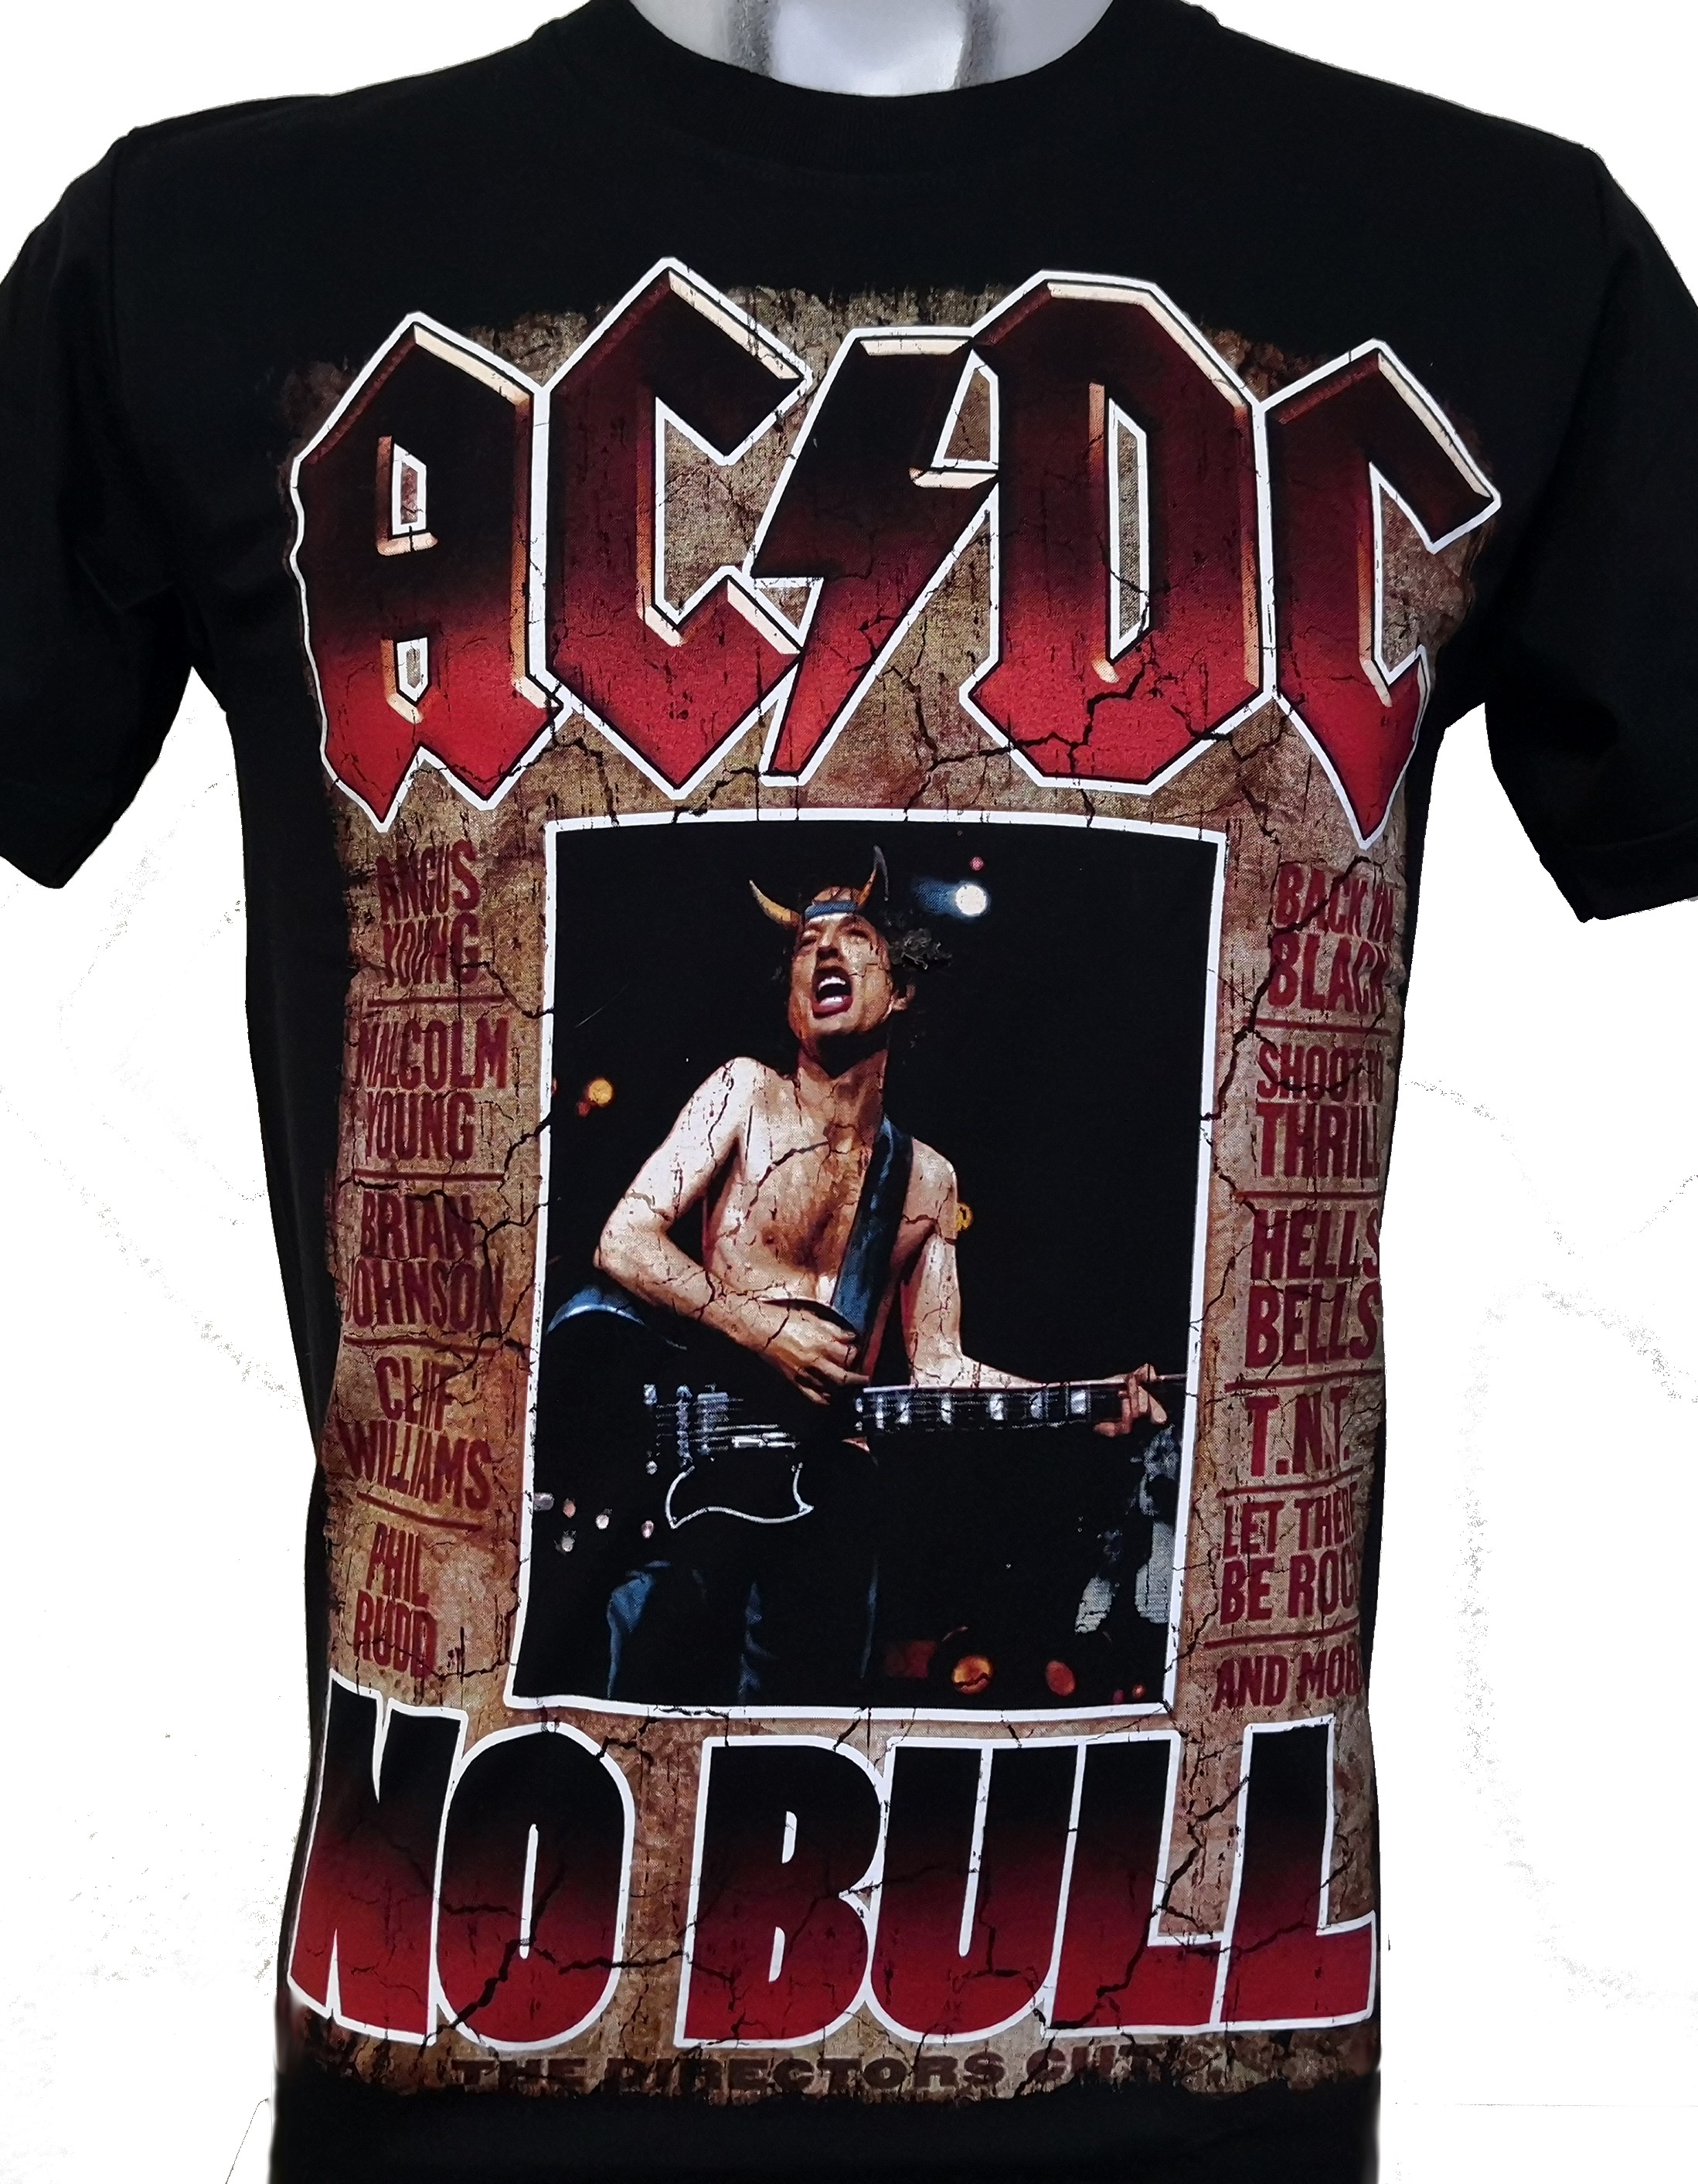 I nåde af Gavmild billig AC/DC t-shirt No Bull size XXL – RoxxBKK